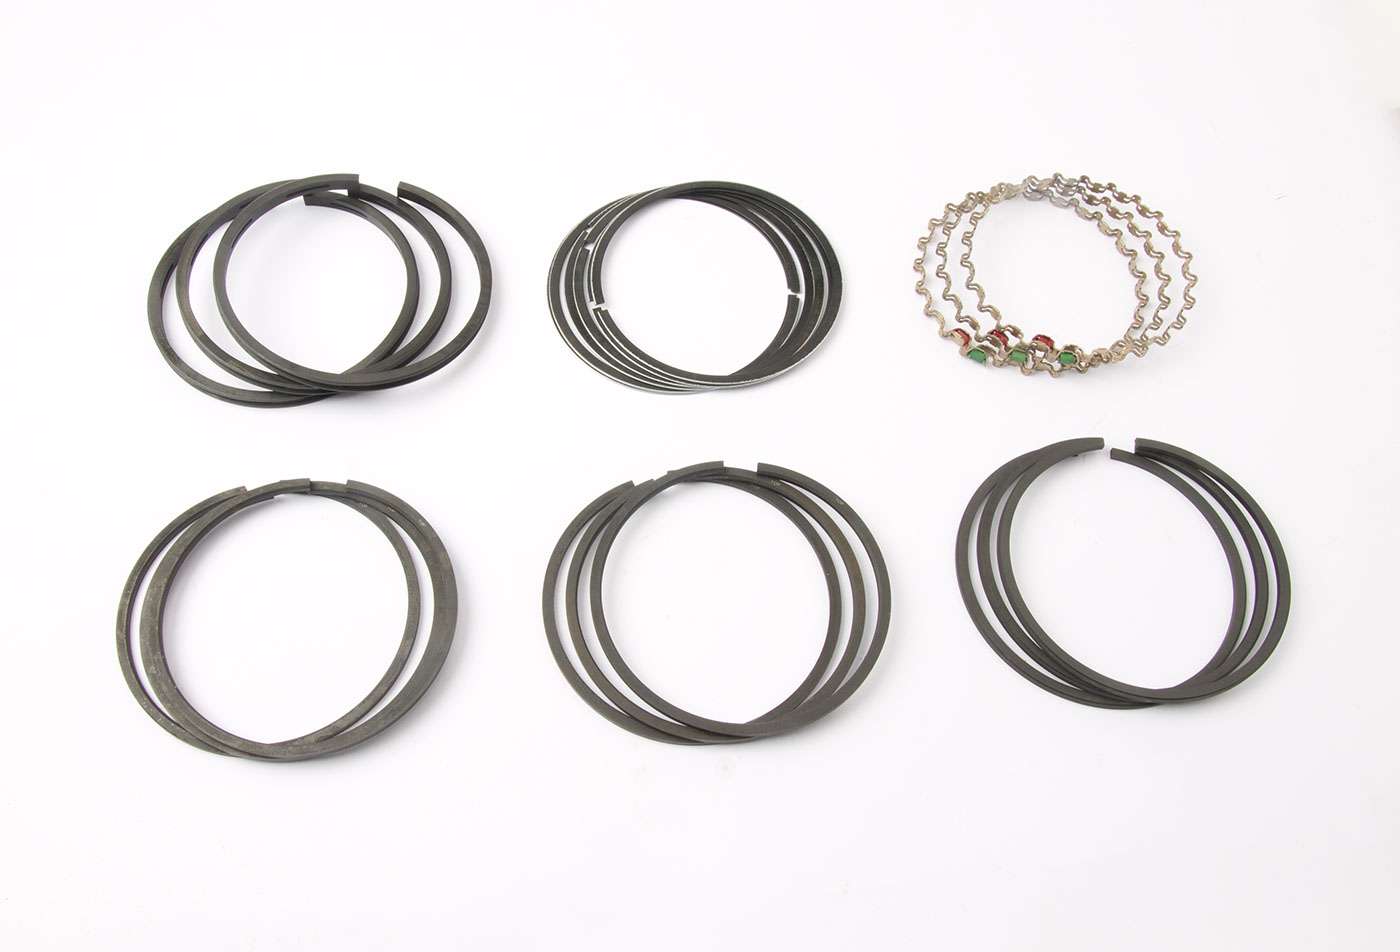 Satz Kolbenringe
Piston ring set
Set de segments de pistons
K